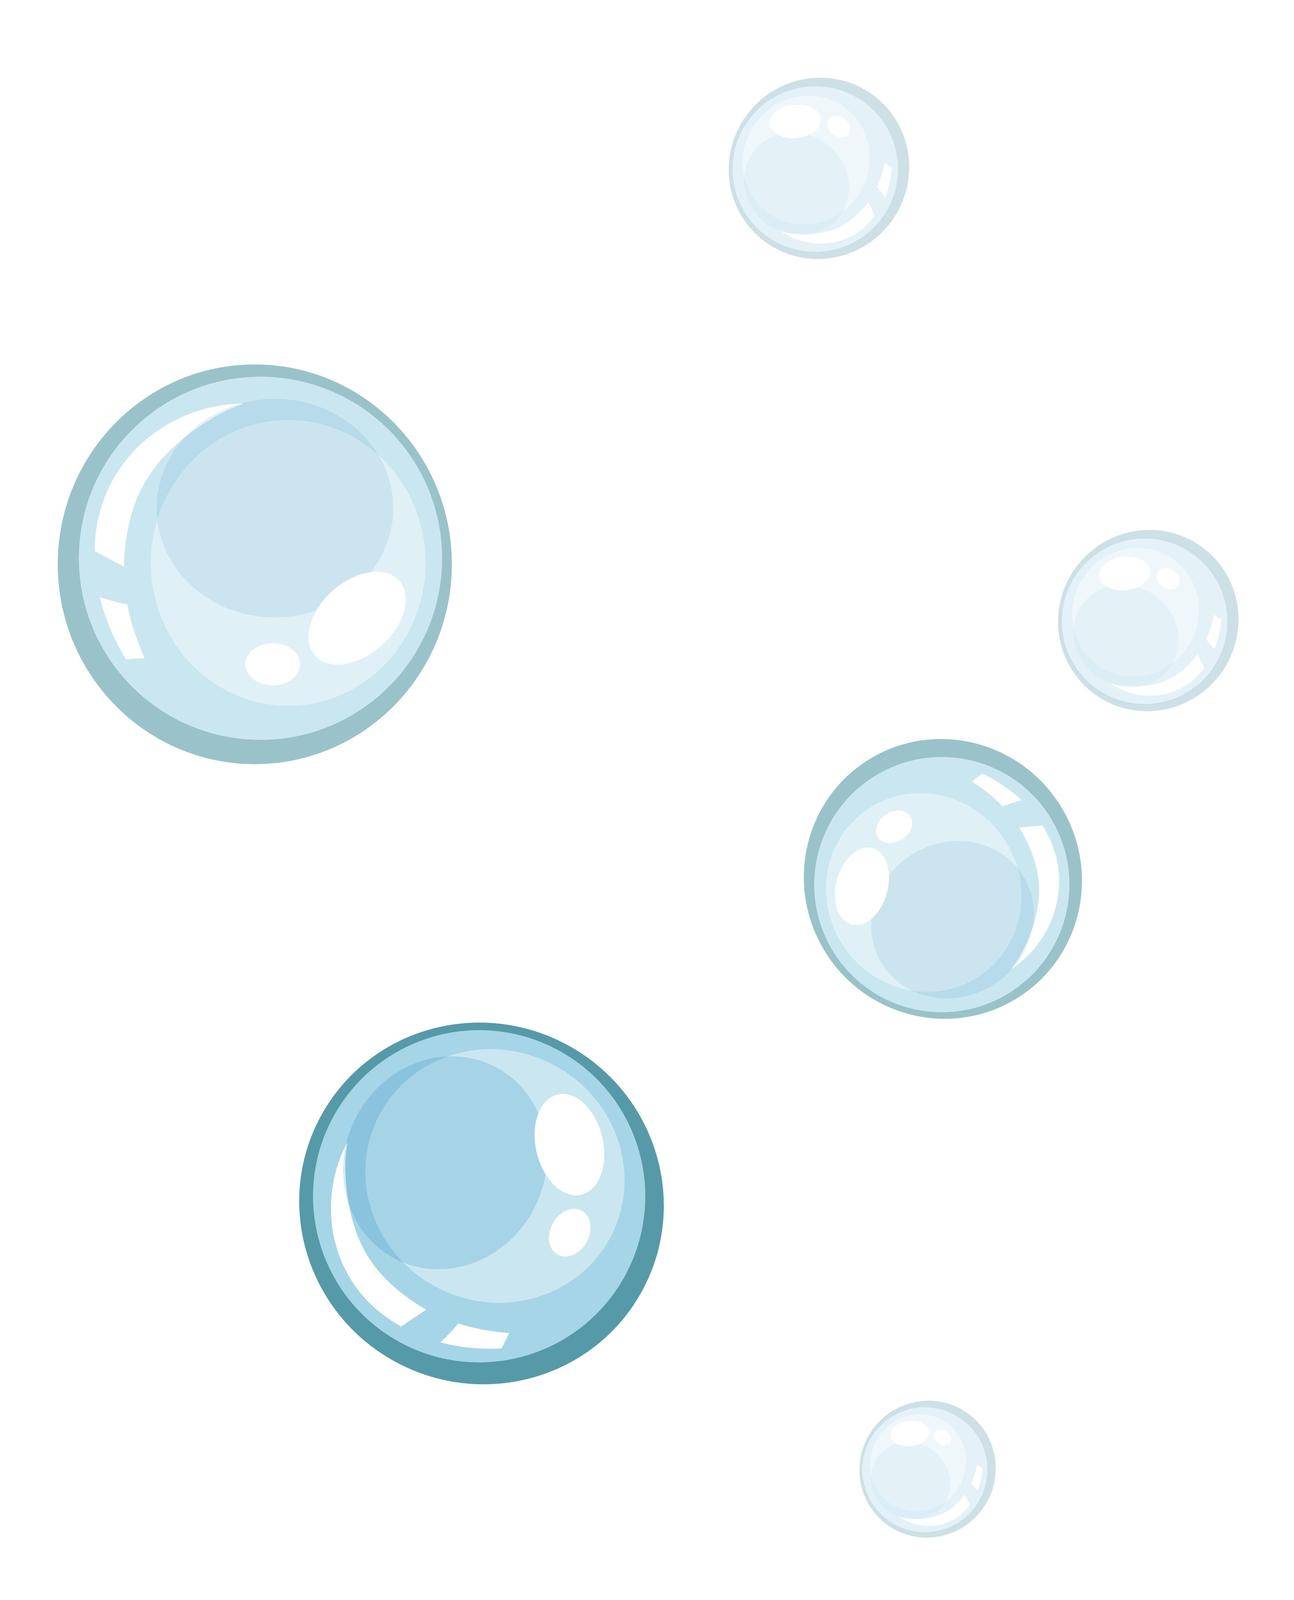 Blue color bubbles on white background